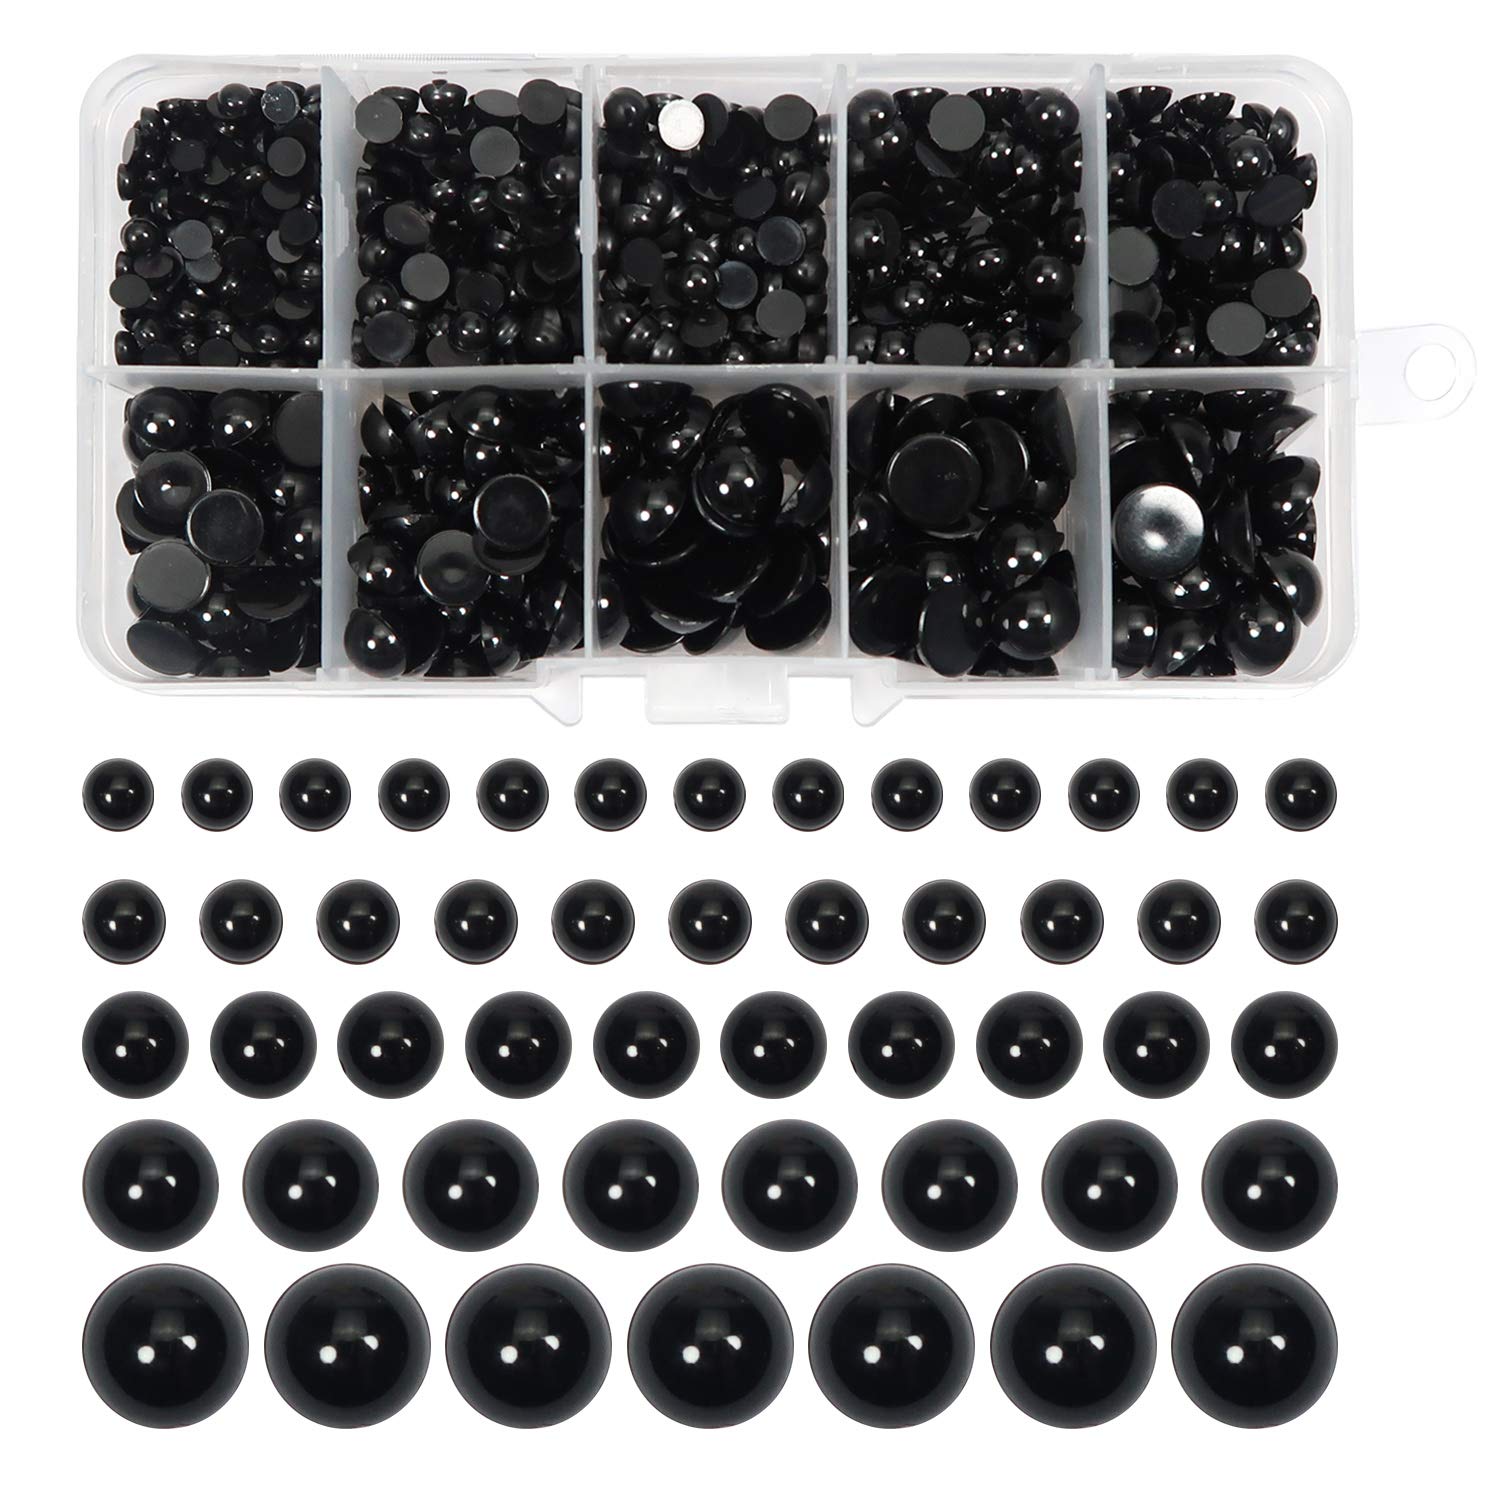 TOAOB 830pcs Round Black Plastic Doll Eyes 4mm 5mm 6mm 8mm 10mm Flatback  Cabochon Button Eyeball Beads for Stuffed Animals Amigurumis Crochet Bears  Crafts Making 4mm/5mm/6mm/8mm/10mm